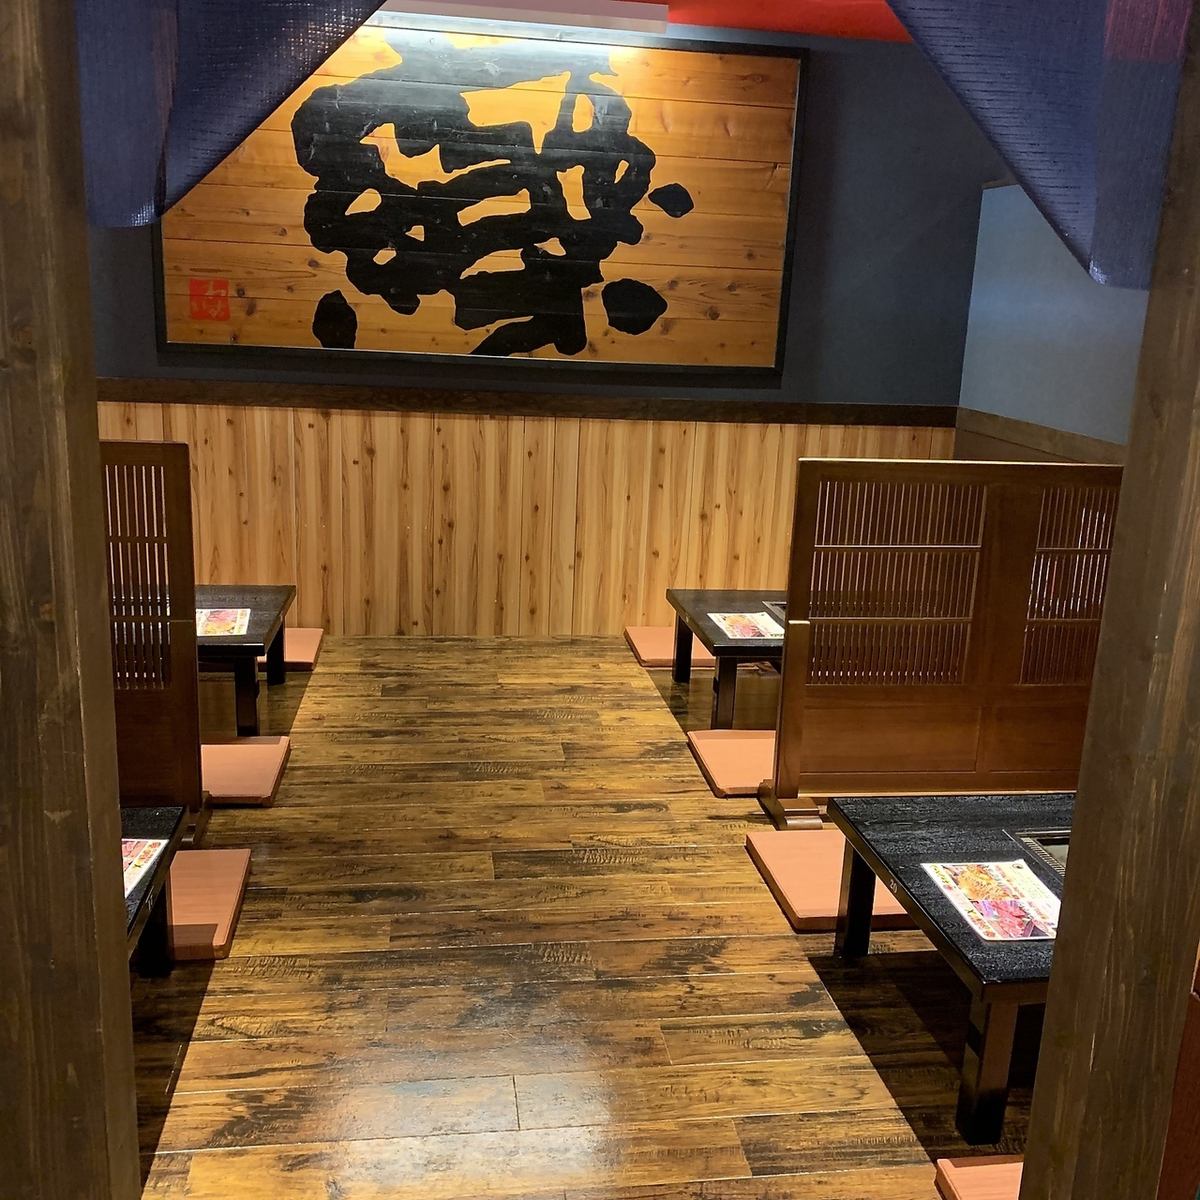 Okonomiyaki that makes children happy ♪ There is also a tatami room that makes children happy ♪